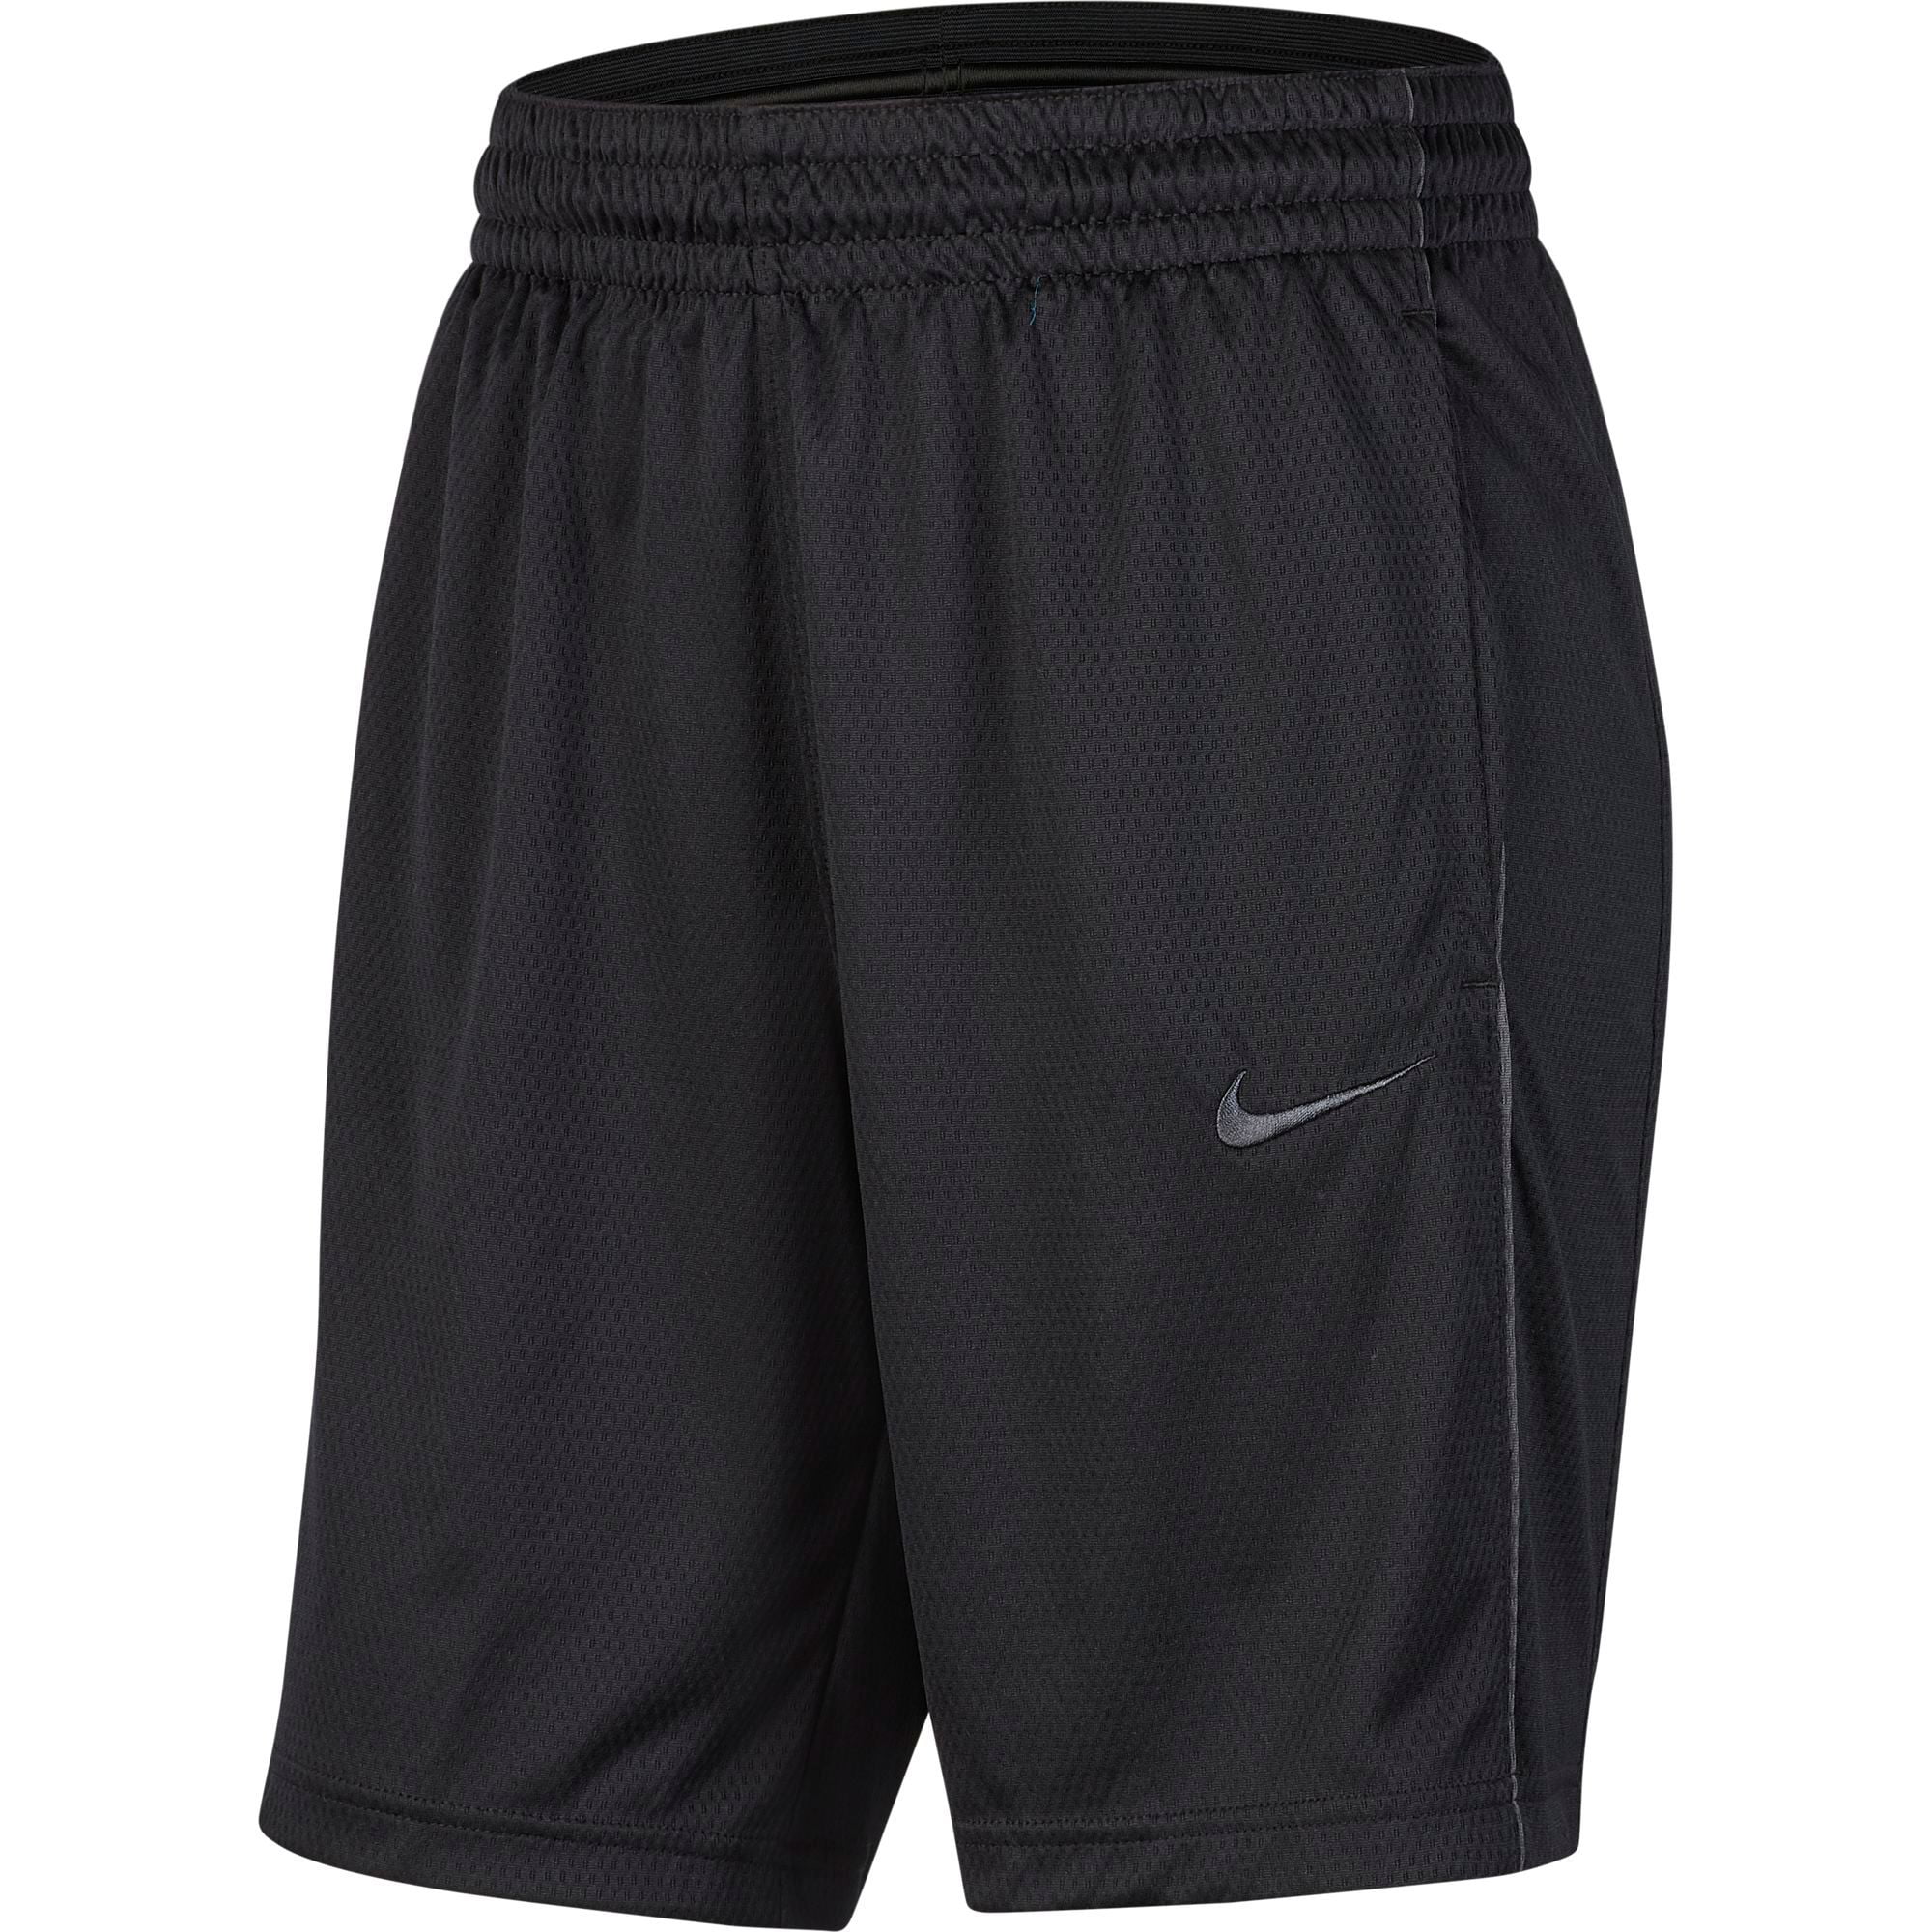 Nike Women's Dri-FIT Basketball Shorts - Walmart.com